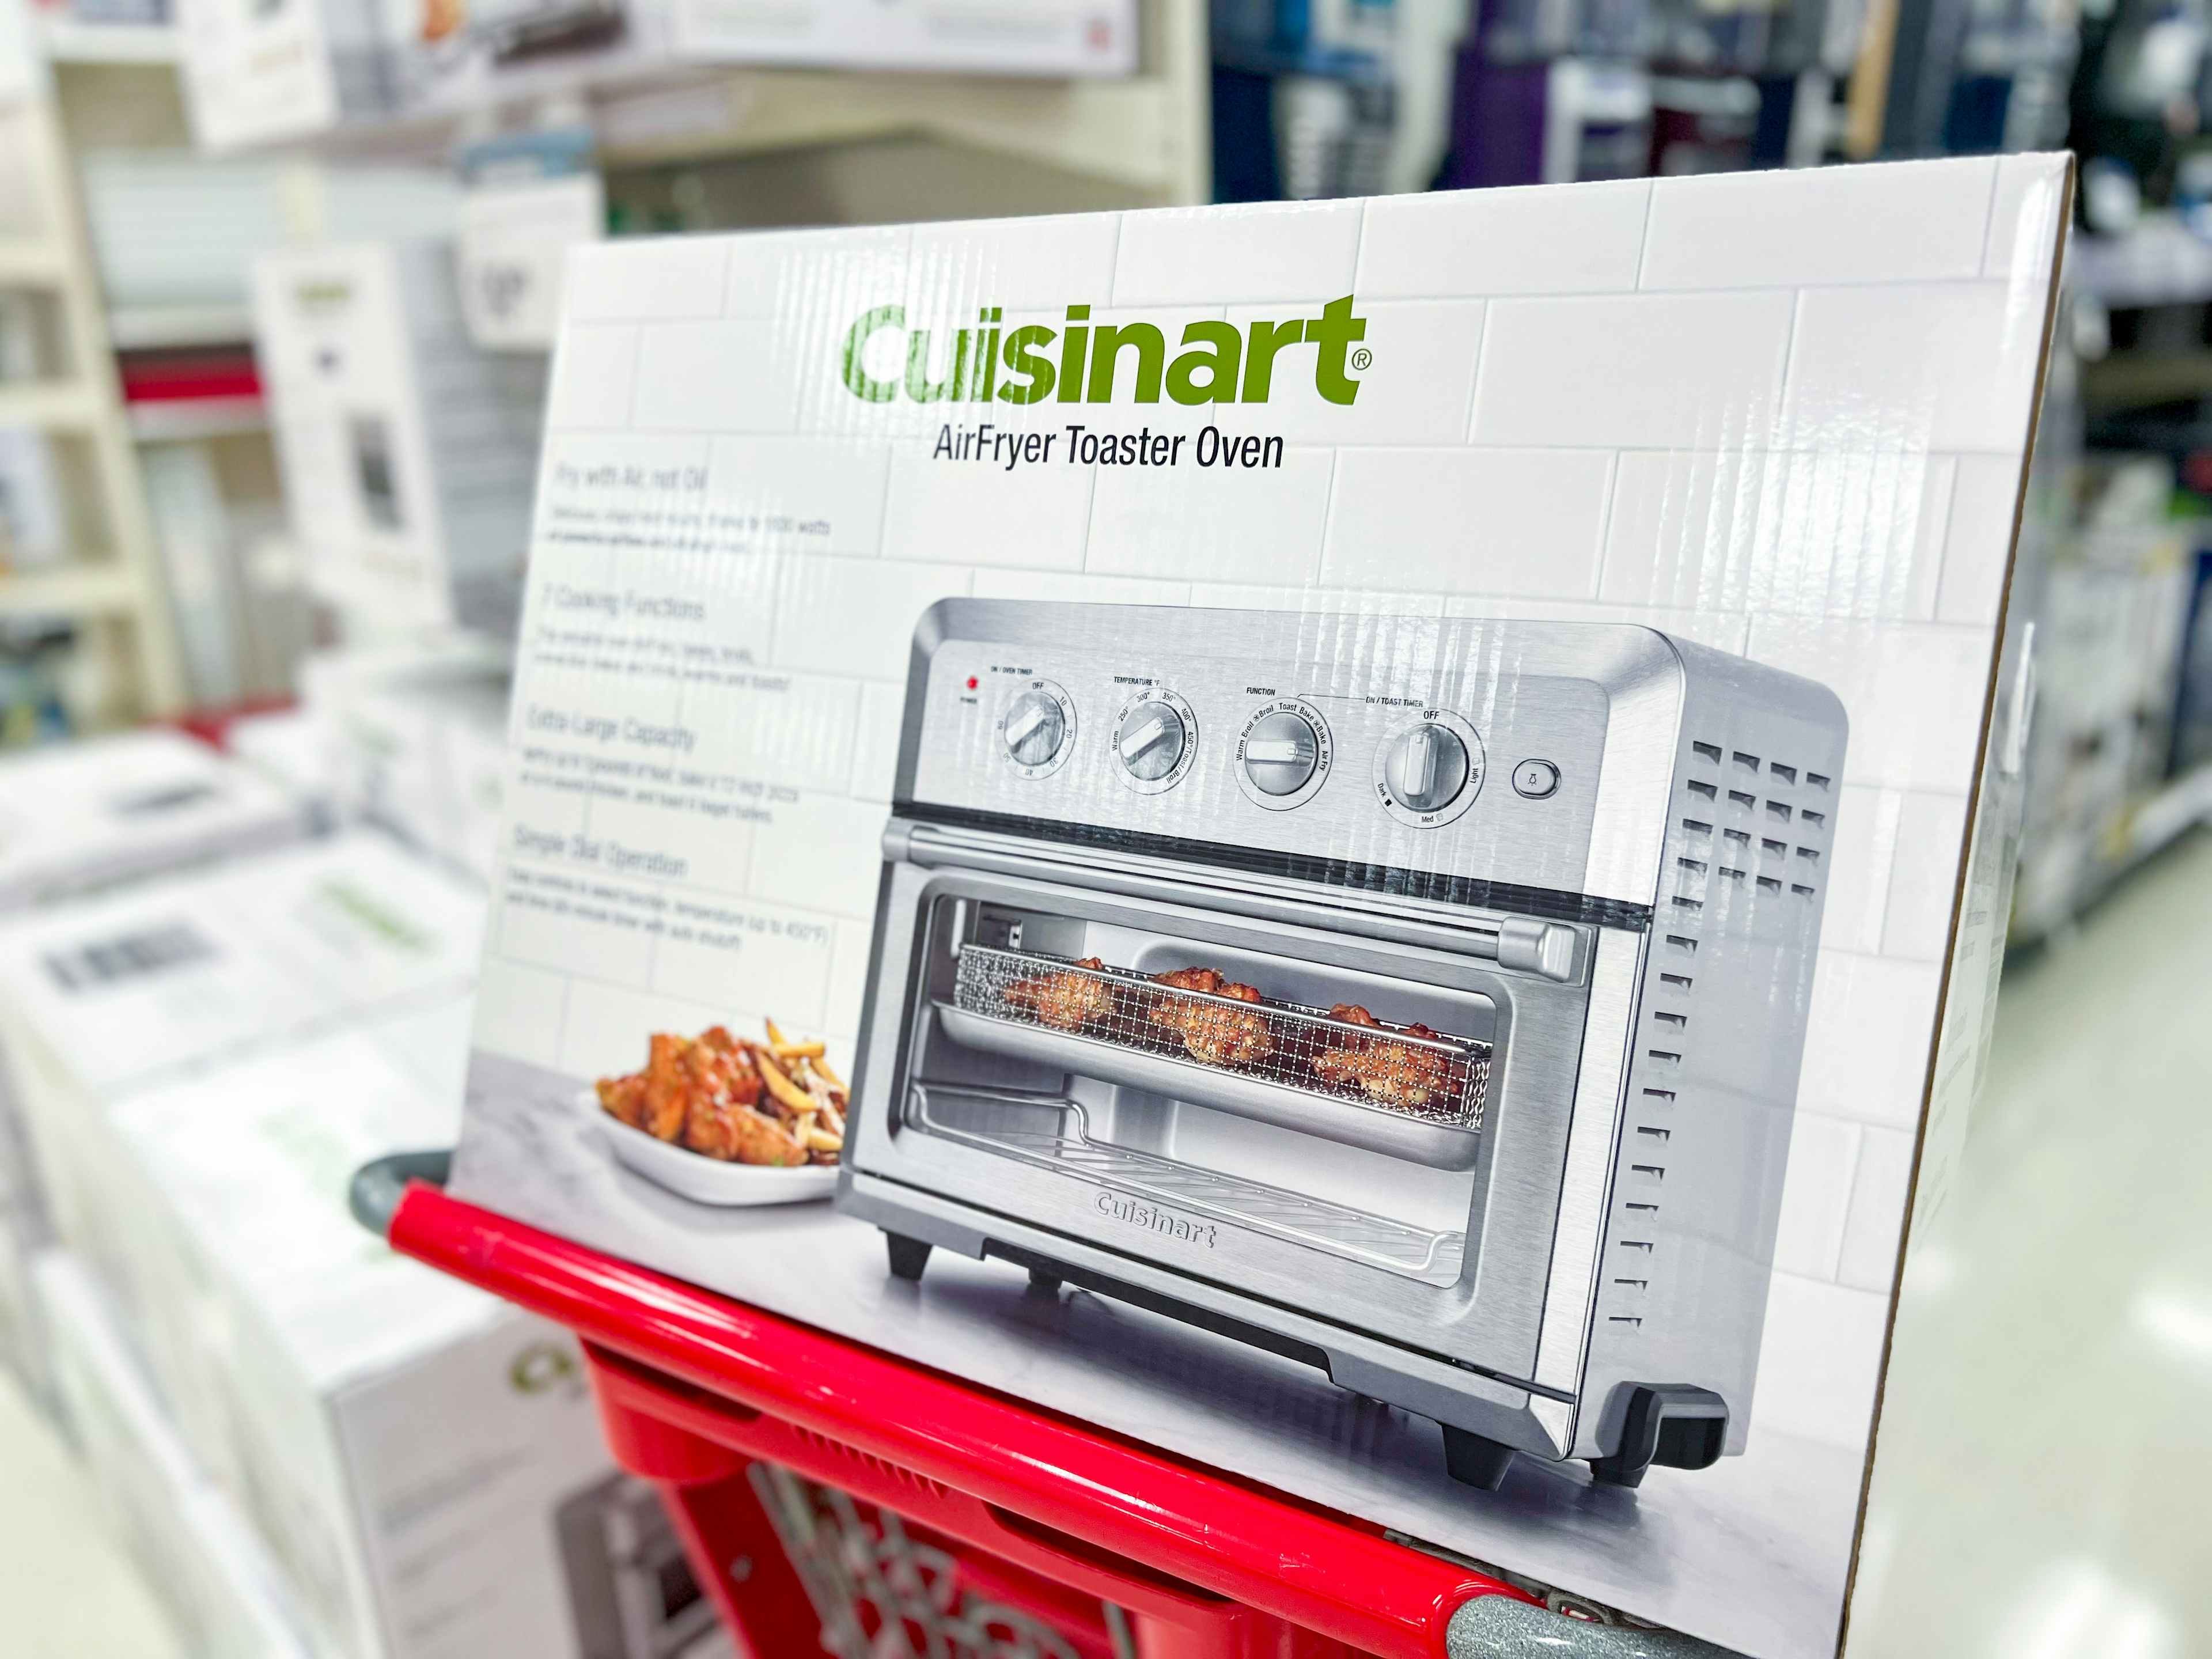 Target Cuisinart Air Fryer Toaster Oven 11:21:23 -1